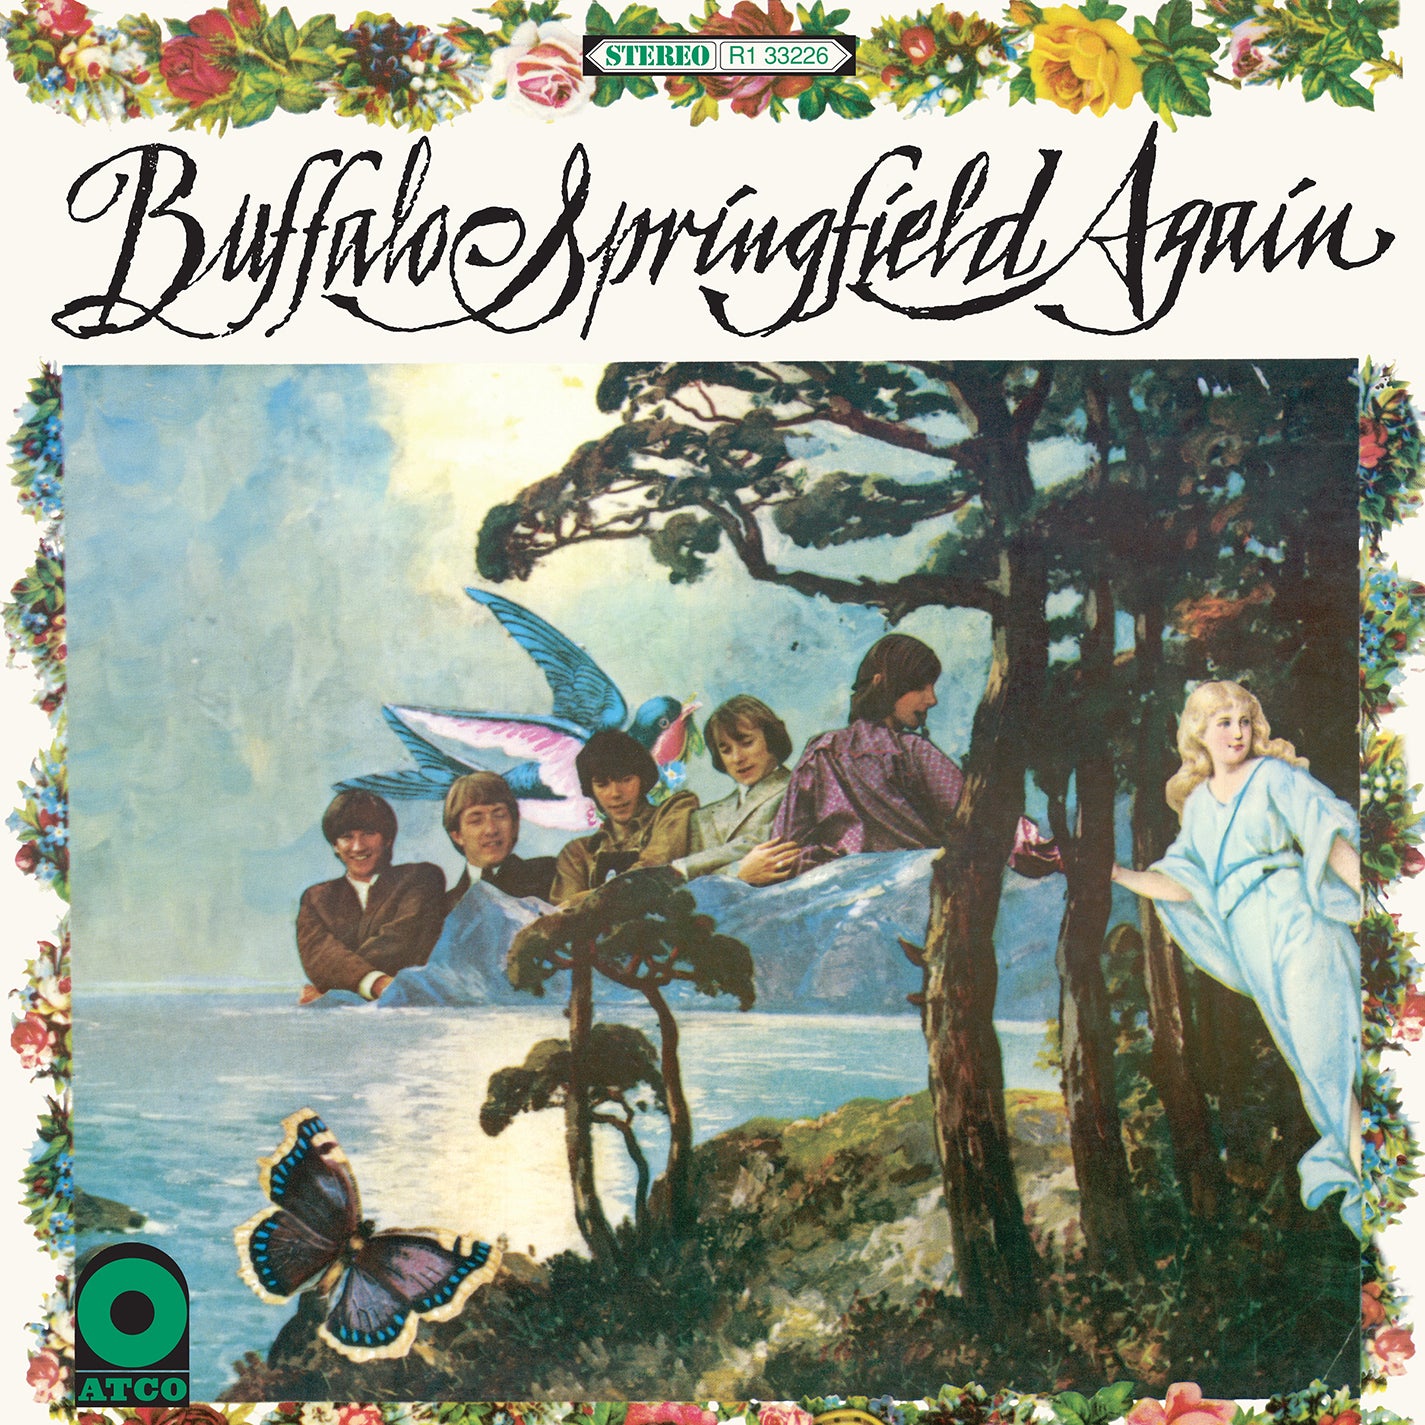 Buffalo Springfield - Buffalo Springfield Again [180-gram Black Vinyl] [Rhino Summer Of 69 Exclusive]